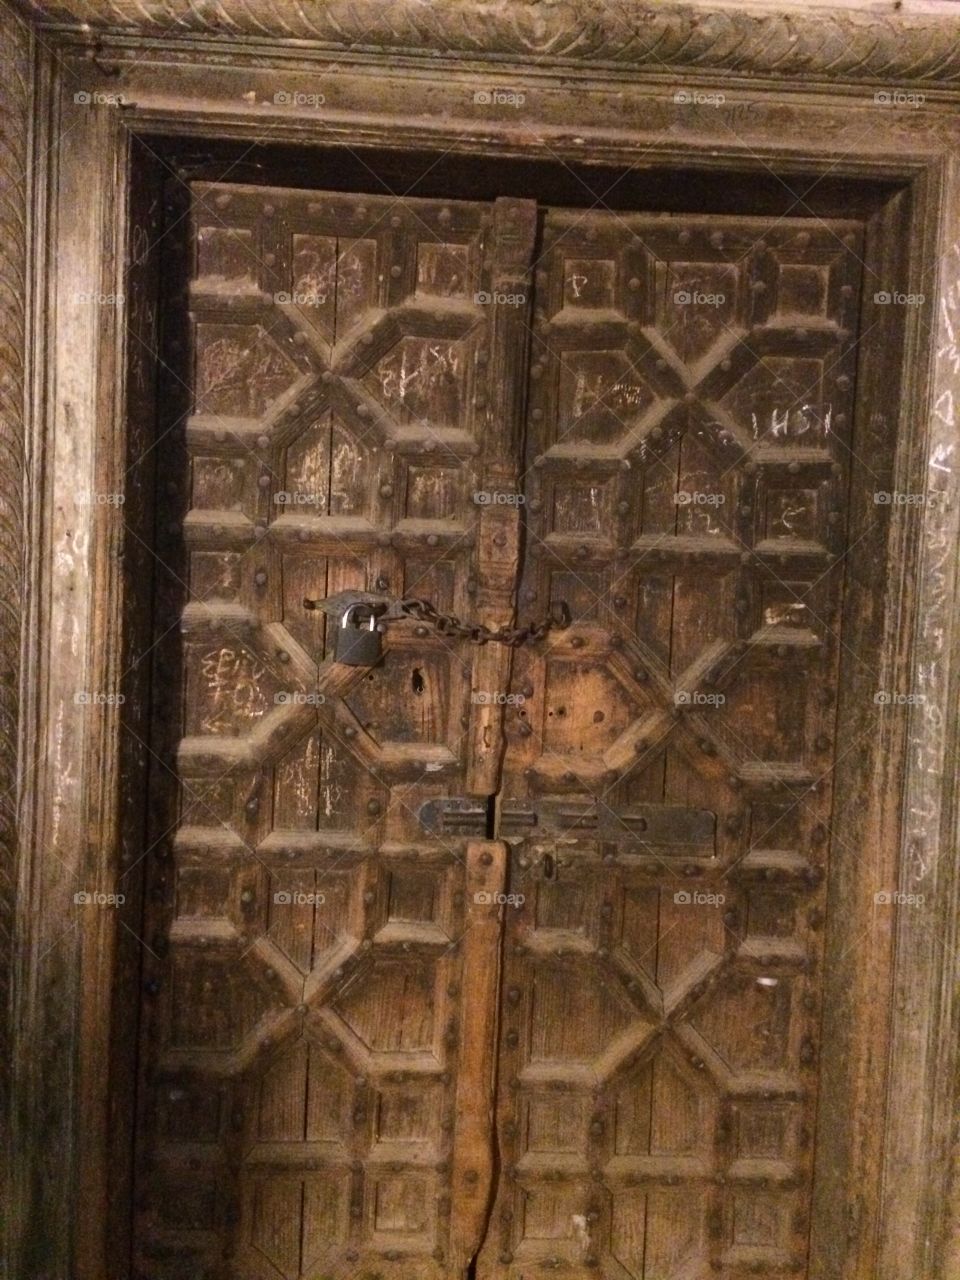 Doors and locks